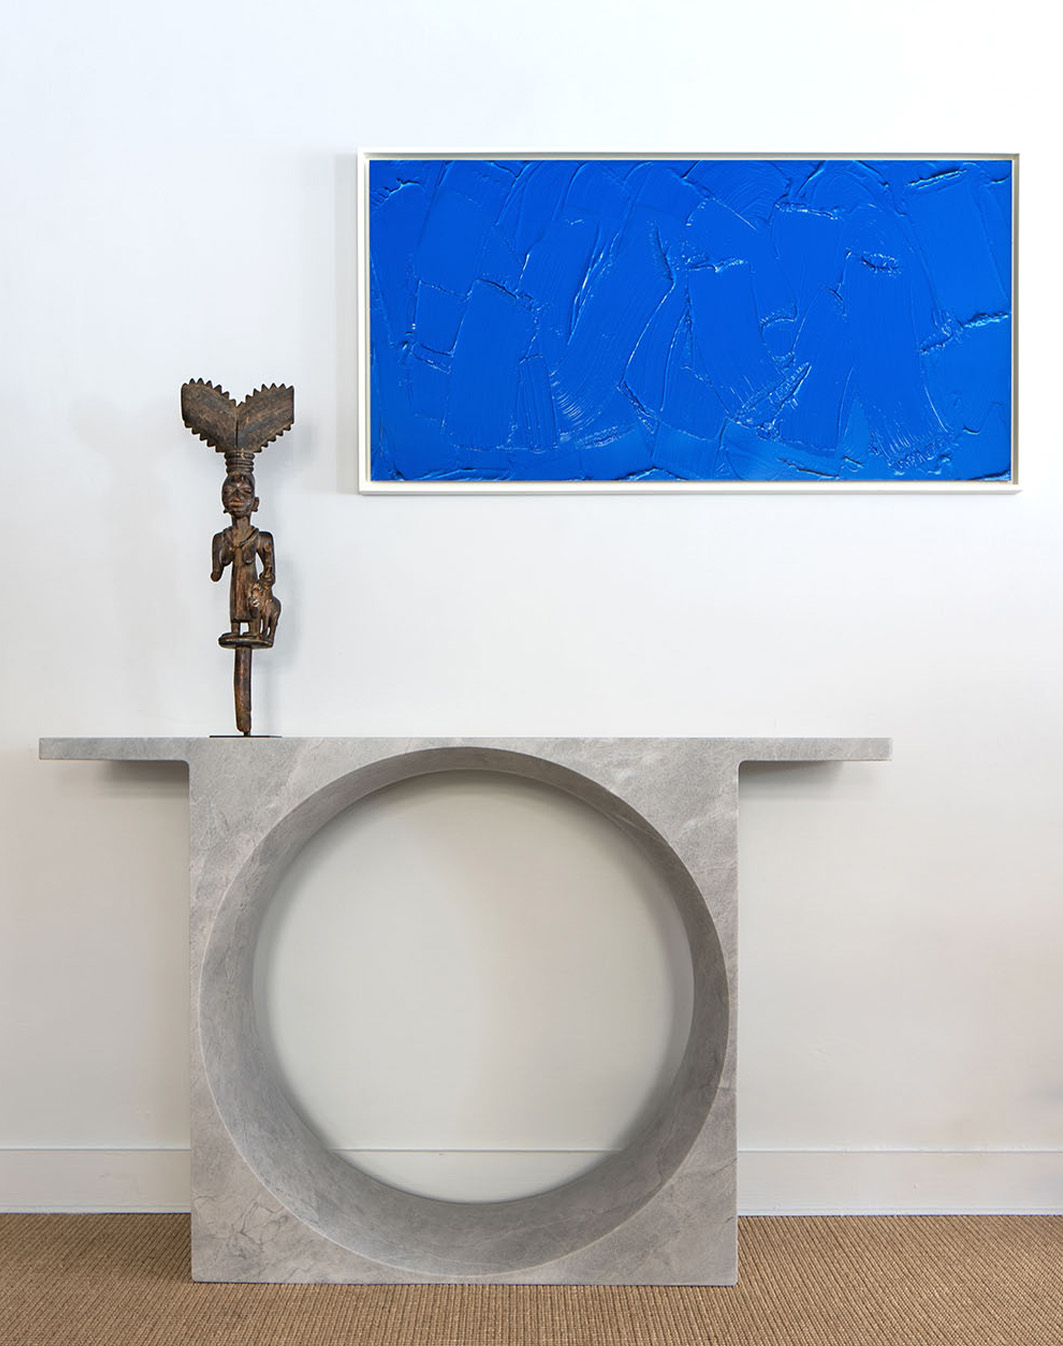 Jasper Morrison - Lucas Ratton x kamel mennour x Galerie kreo @Saint-Tropez